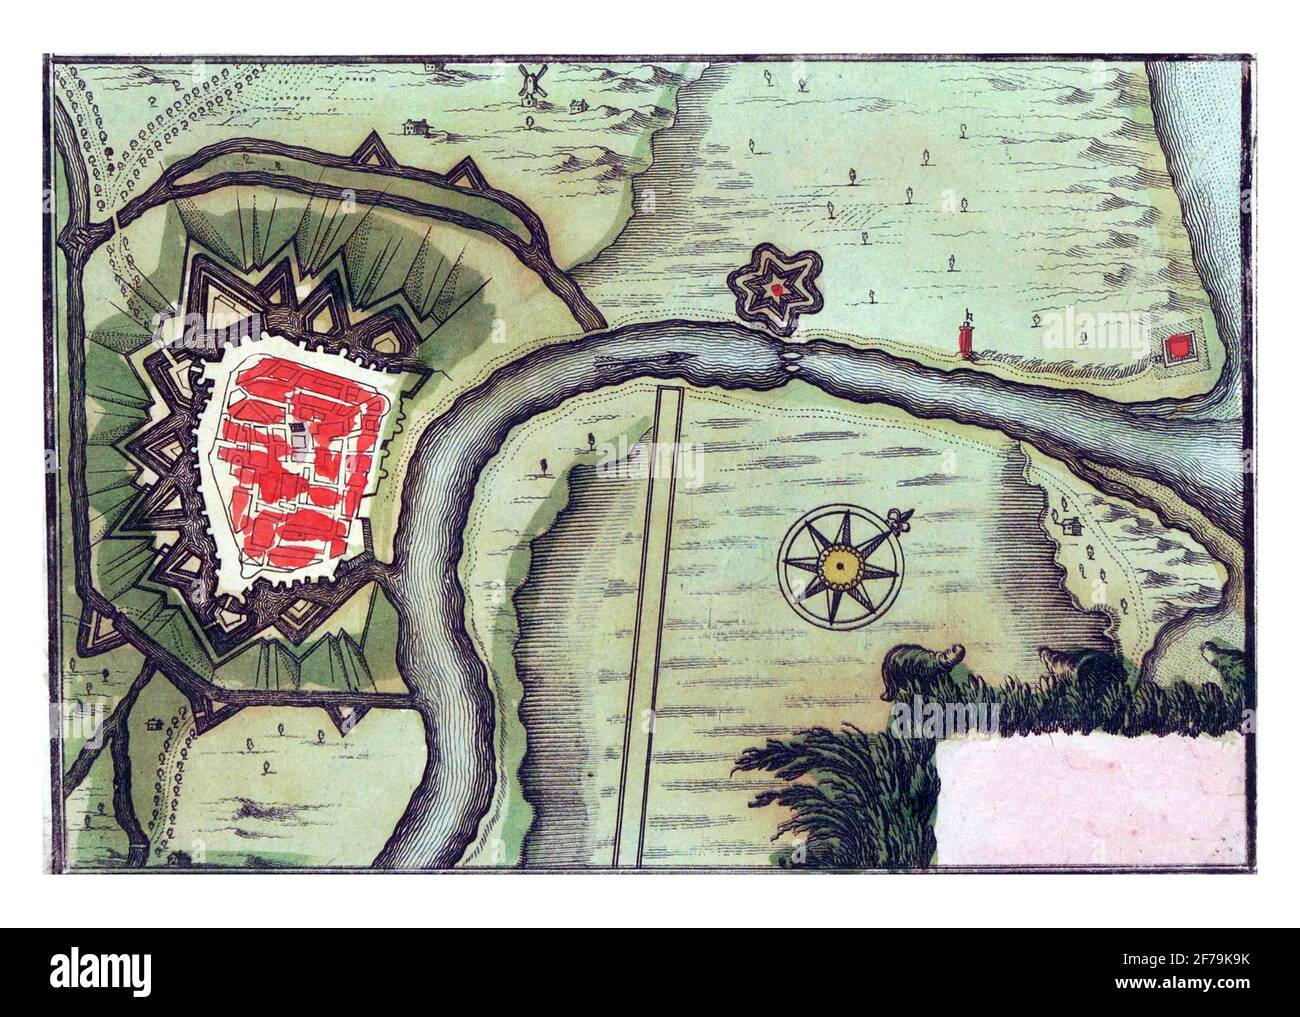 Map of Nieuwpoort, vintage engraving. Stock Photo